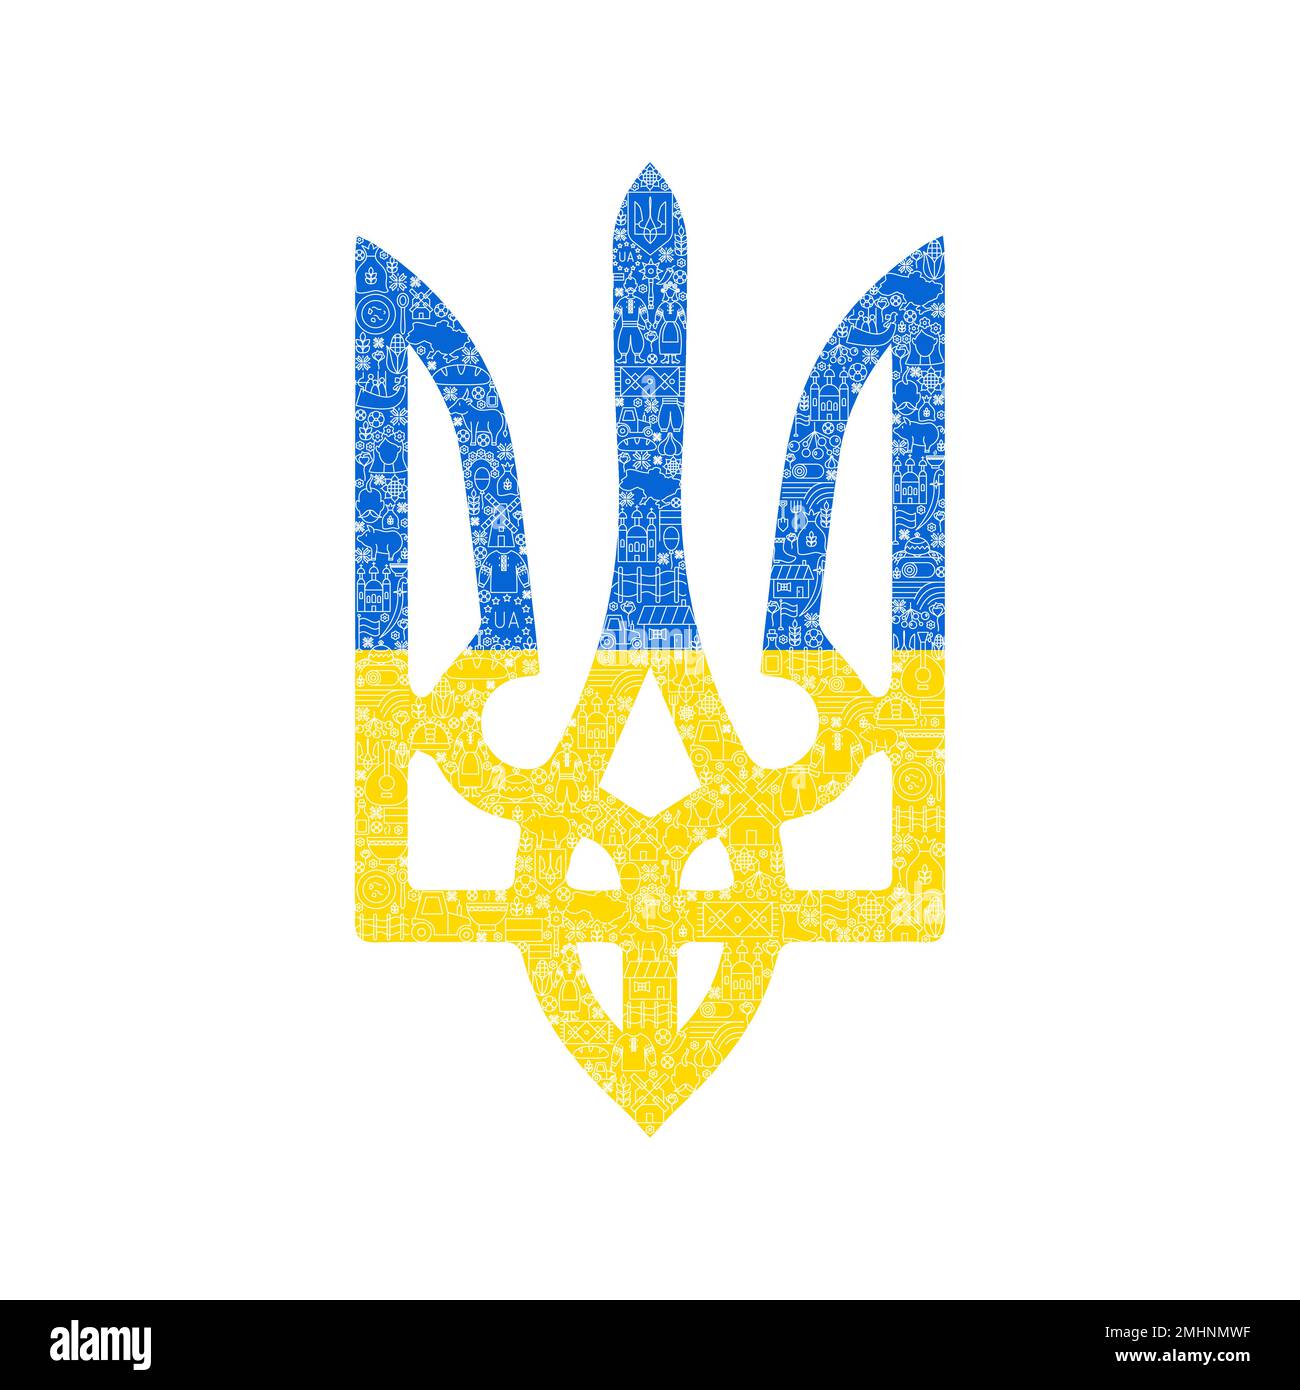 Ucraina Trident Line Art Illustrazione Vettoriale